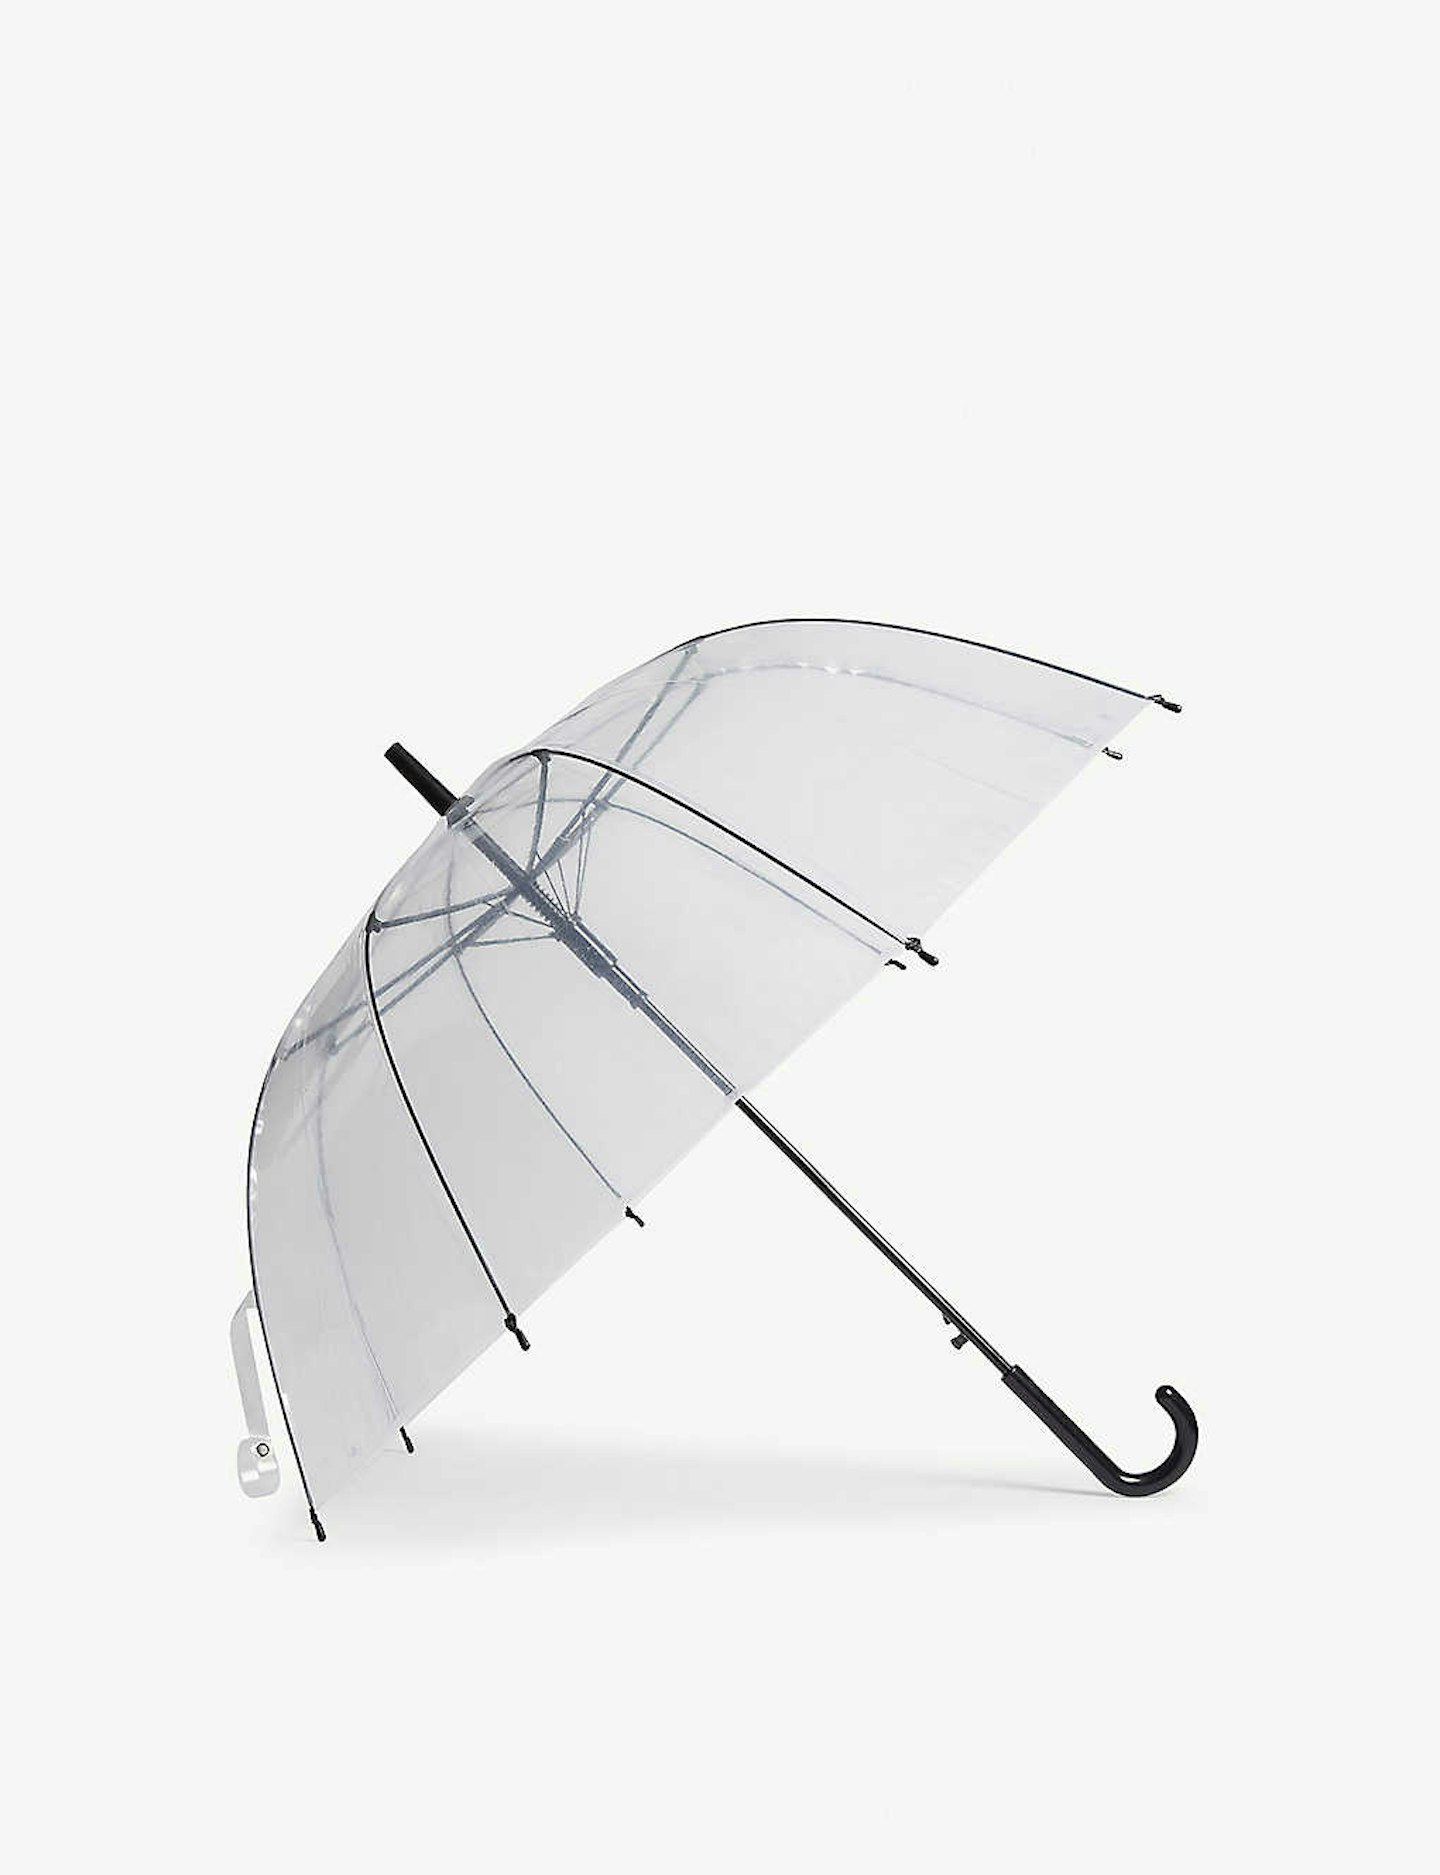 HAY, Clear Canopy Umbrella, £16